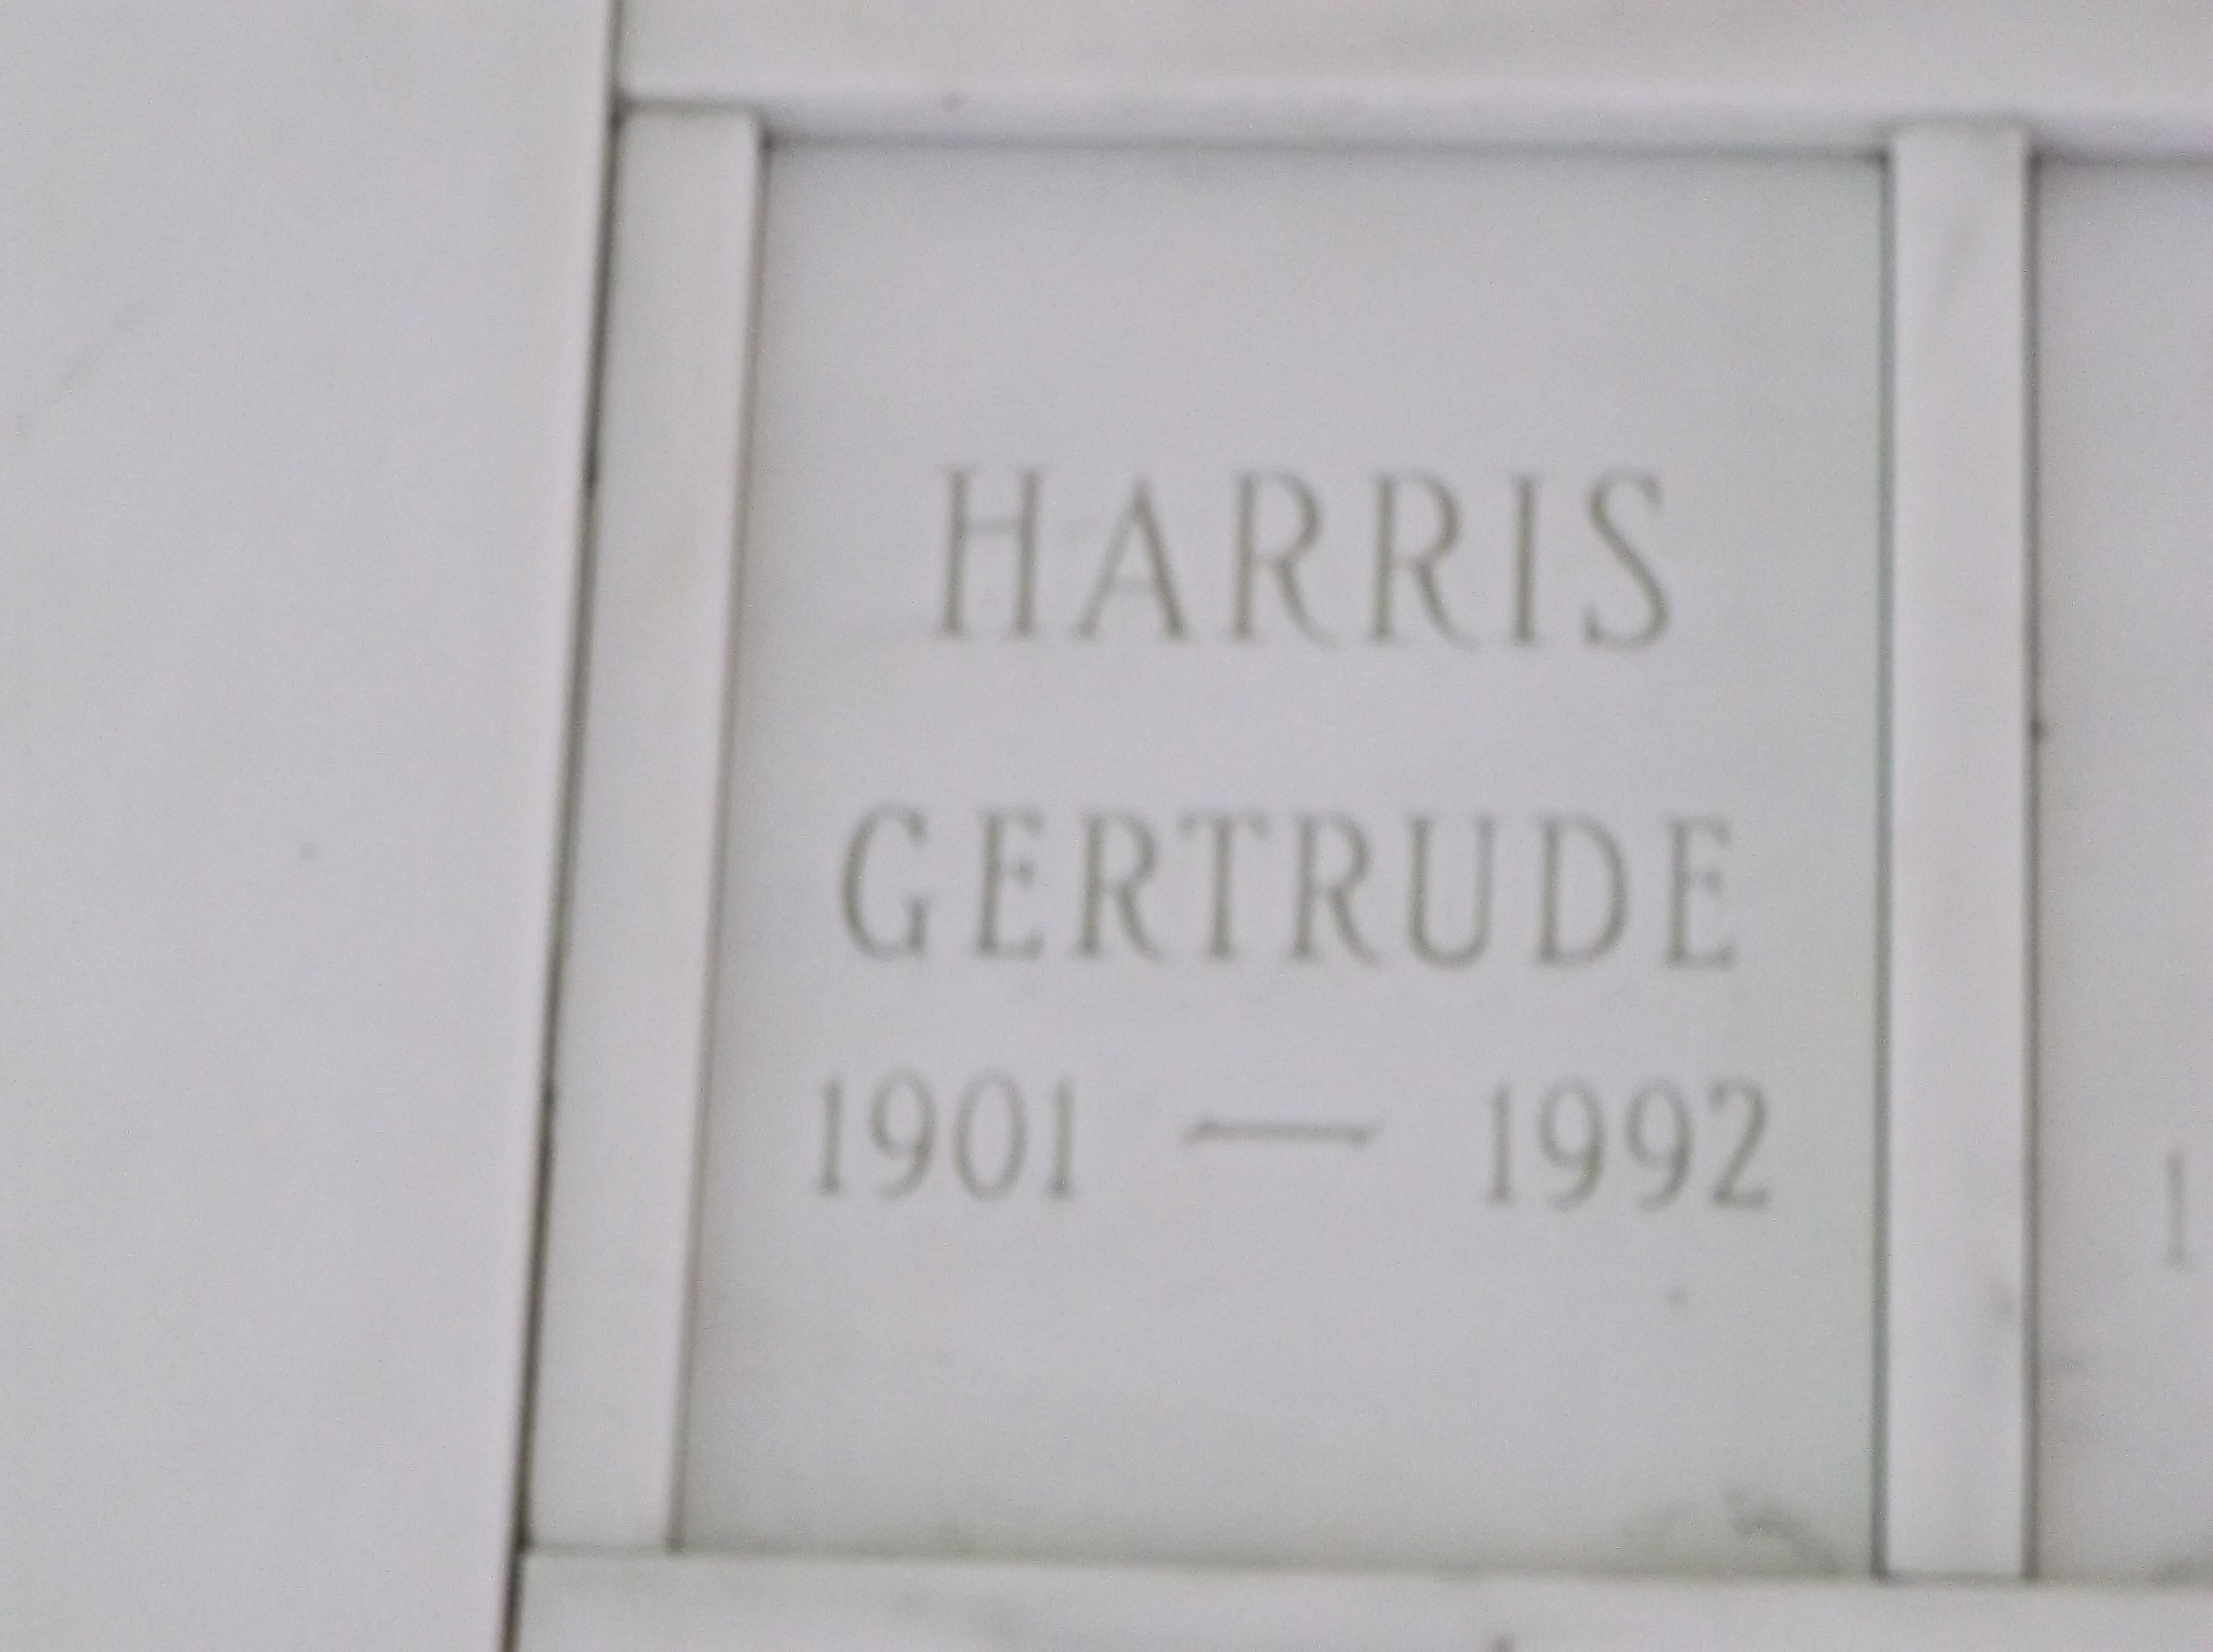 Gertrude Harris